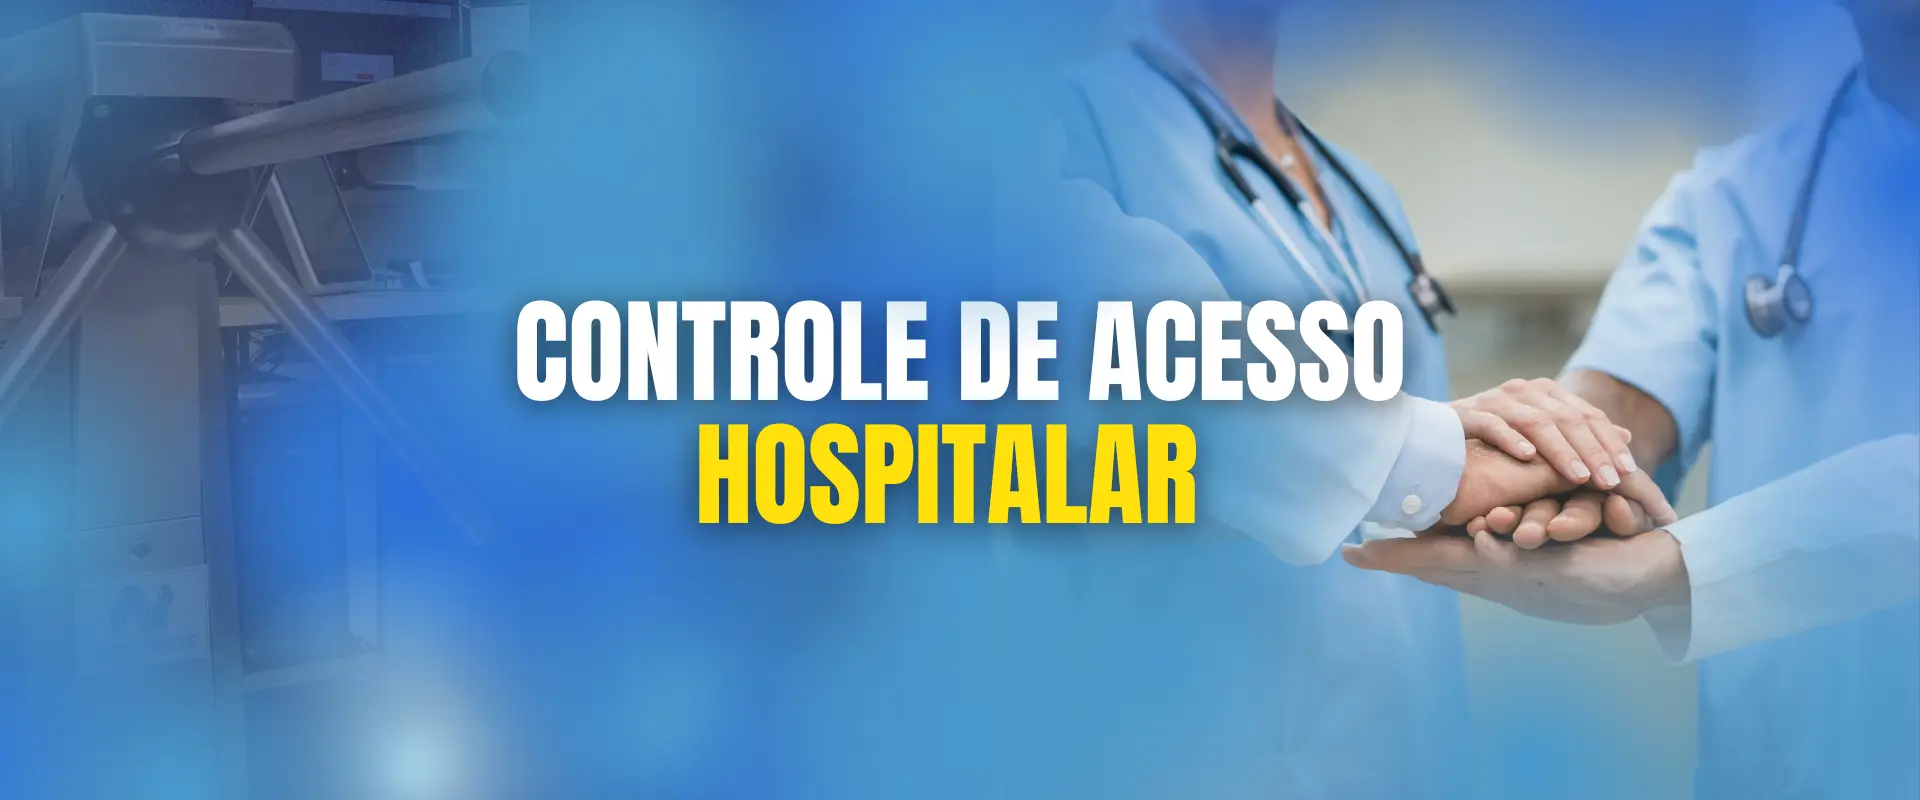 Controle de acesso hospitalar